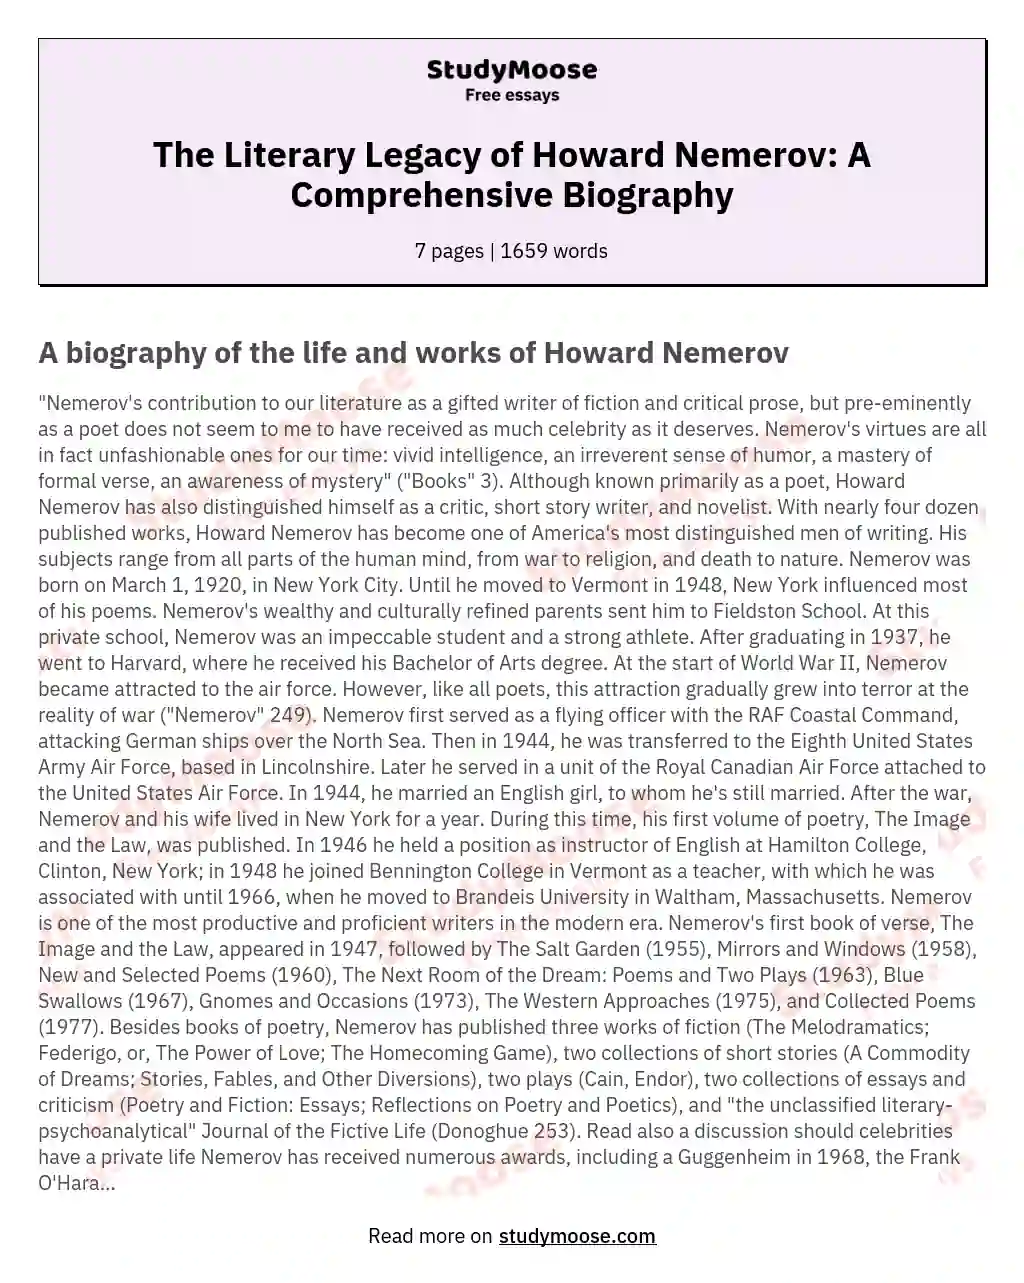 The Literary Legacy of Howard Nemerov: A Comprehensive Biography essay